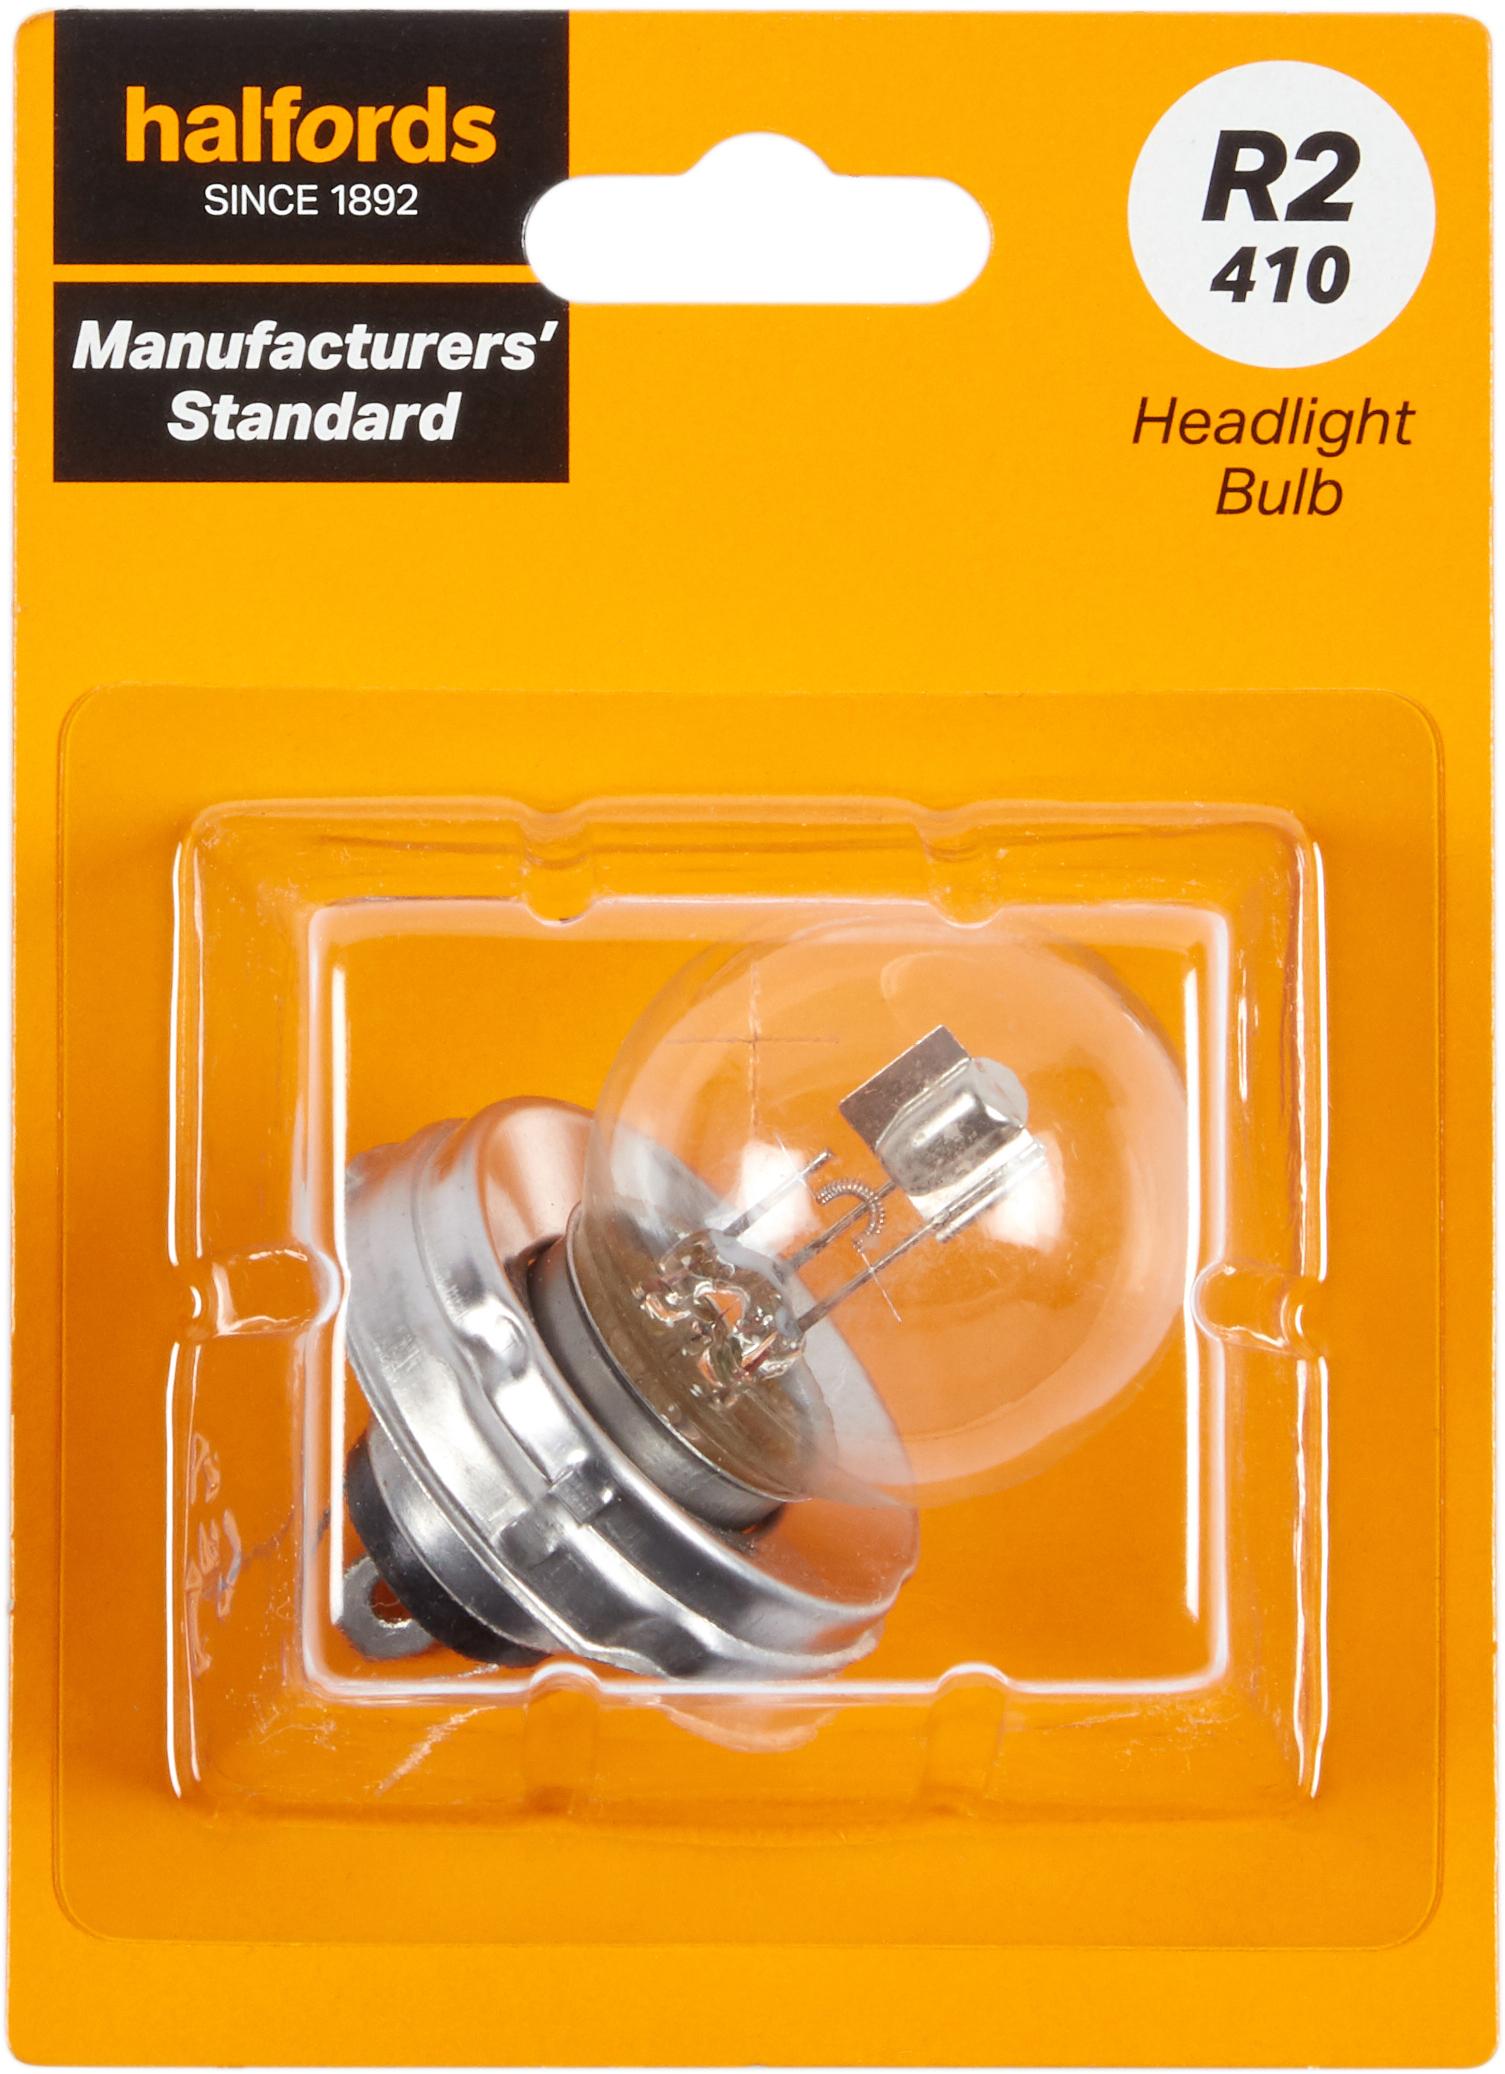 R2 410 Car Headlight Bulb Manufacturers Standard Halfords Single Pack